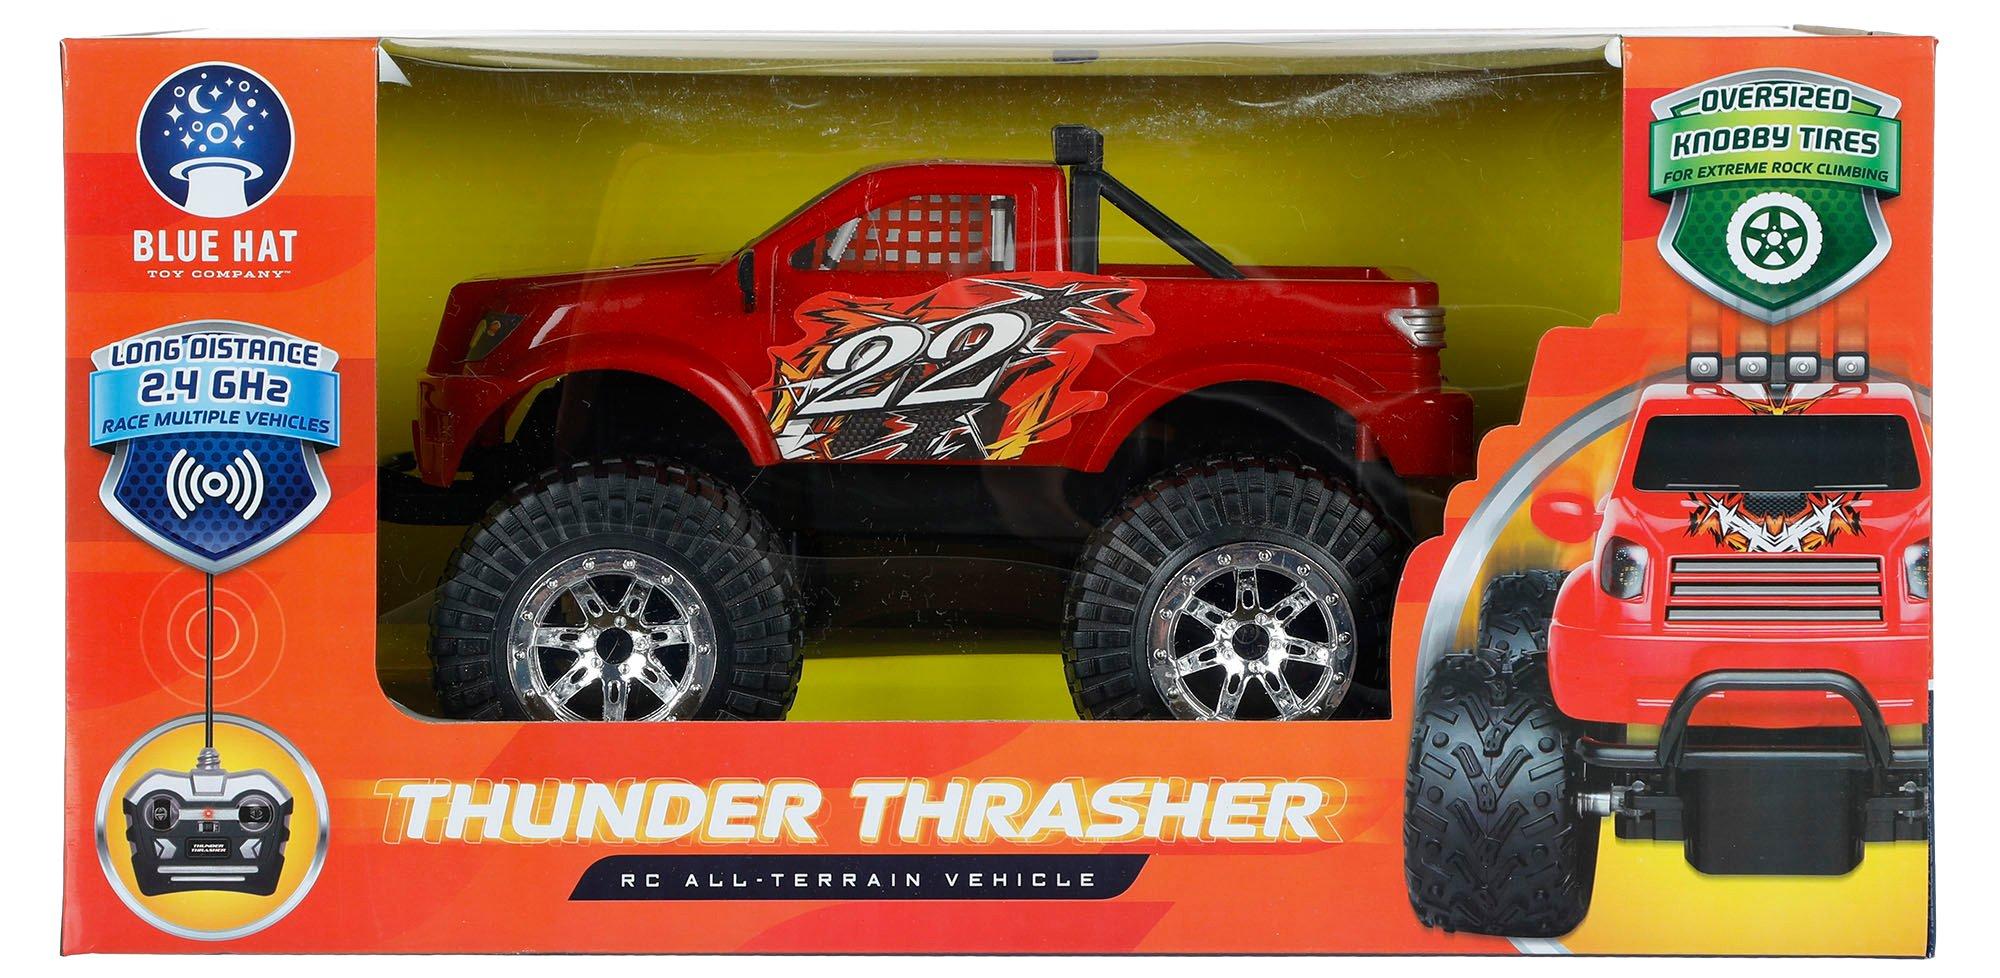 thunder thrasher remote control truck